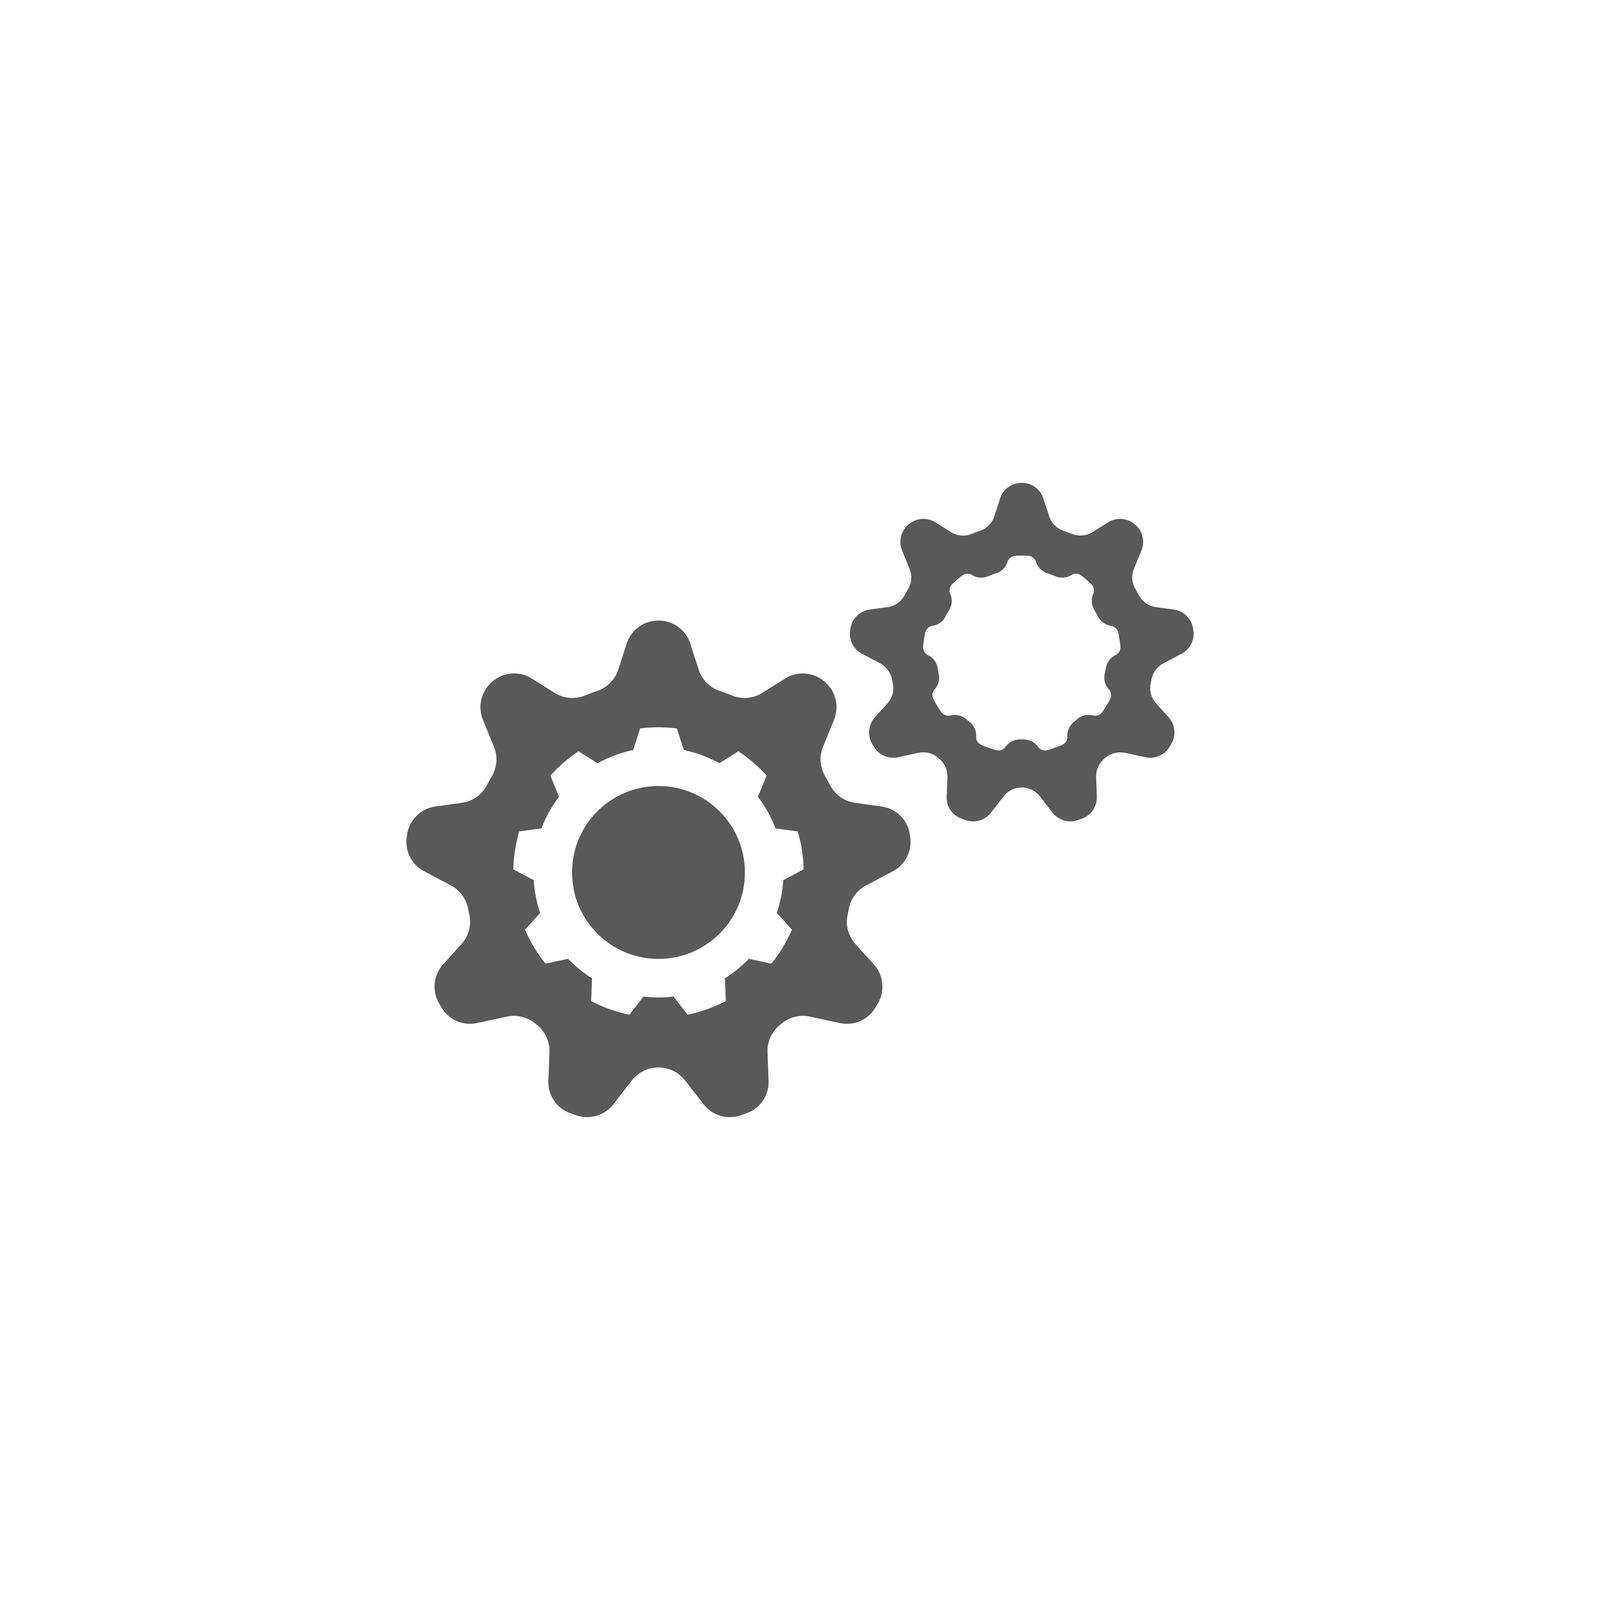 gear icon logo vector icon by Elaelo